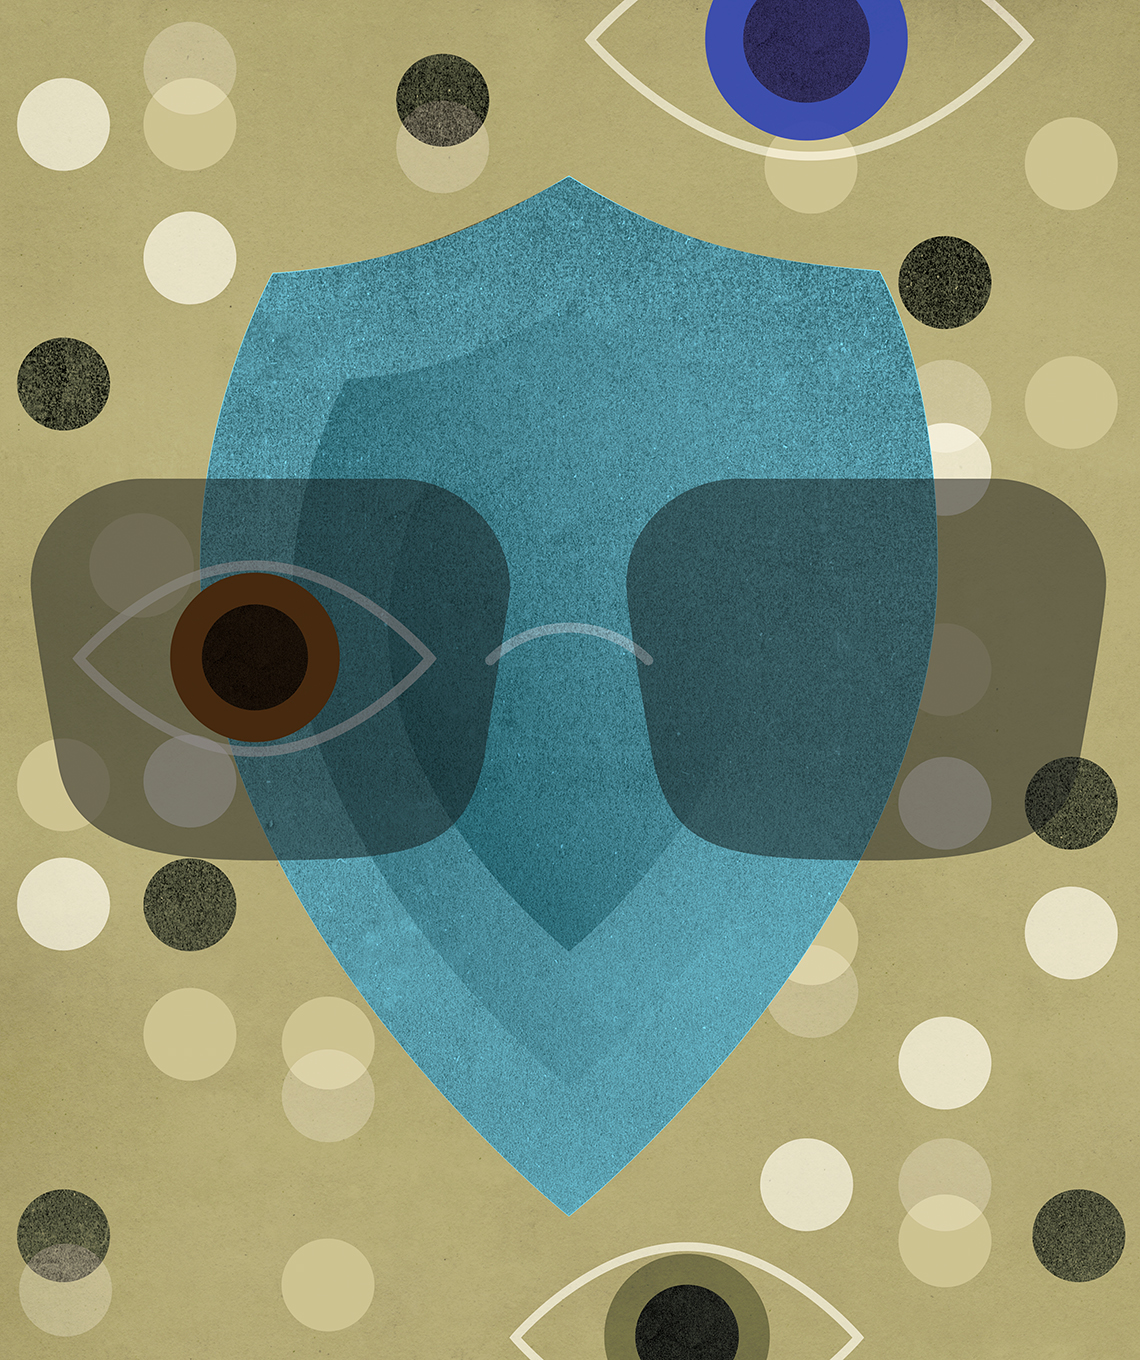 Ilustración semi abstracta estilizada de un escudo con anteojos